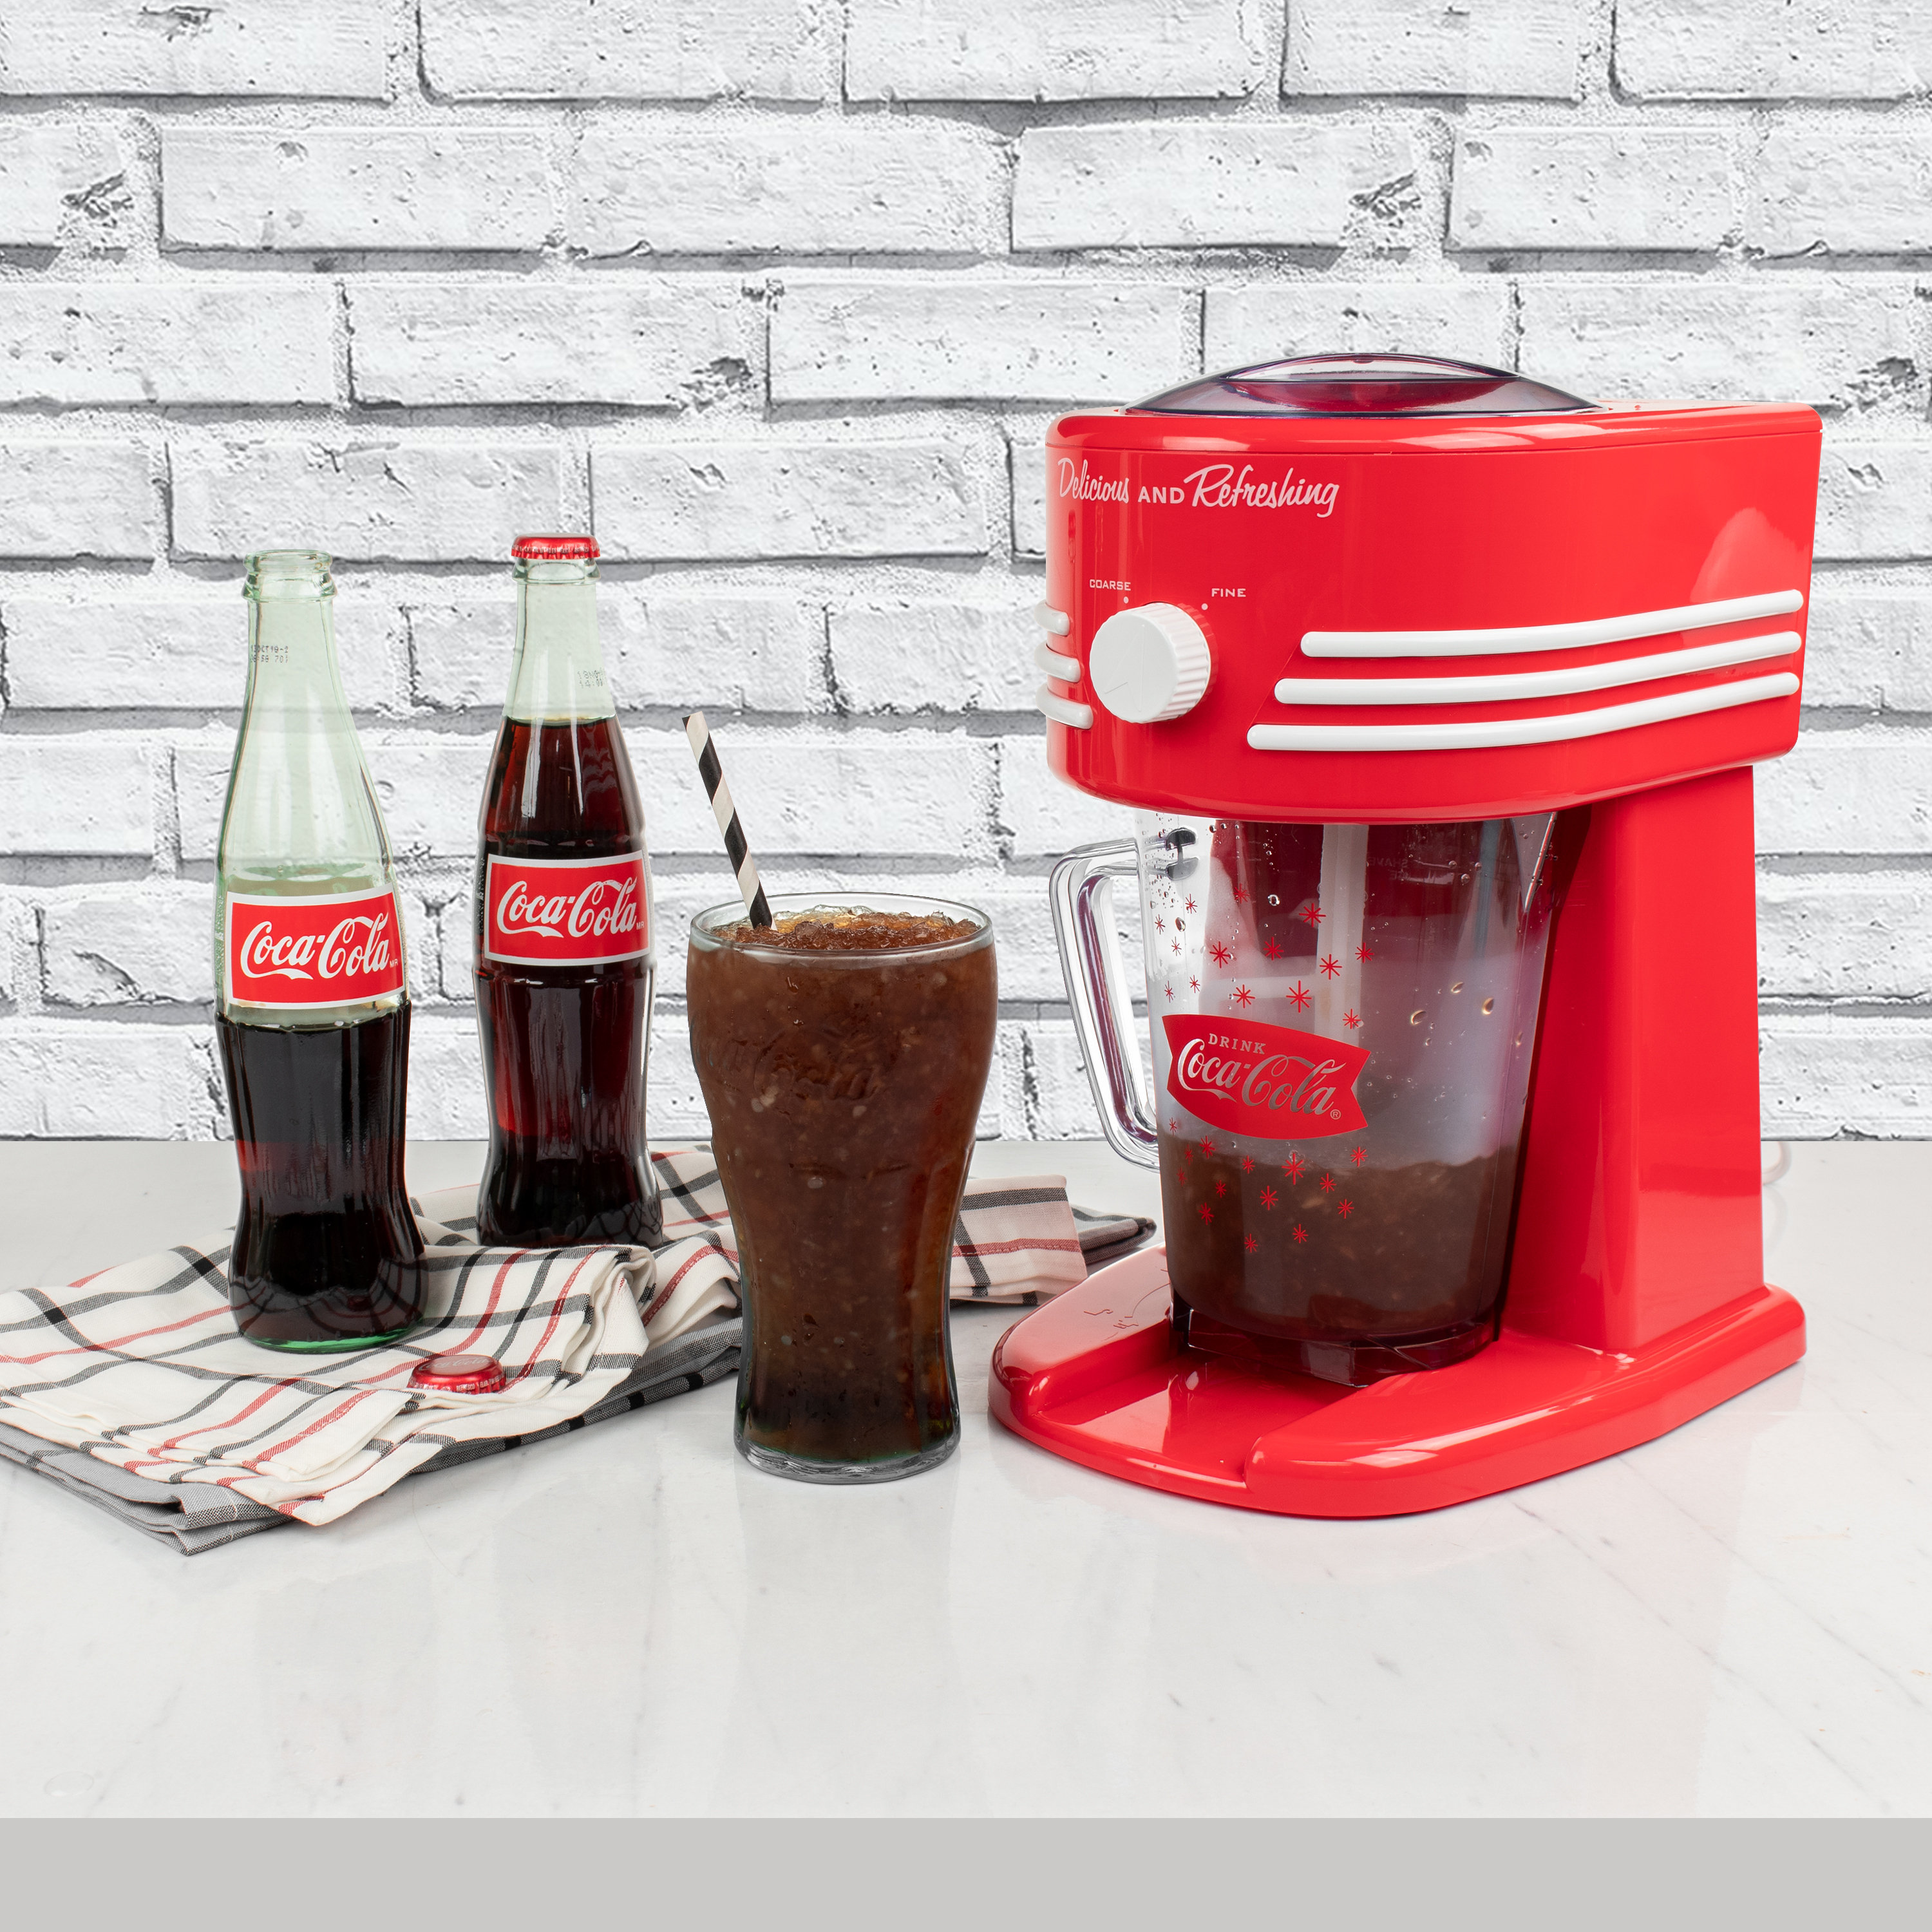 how does the coca cola slush machine work